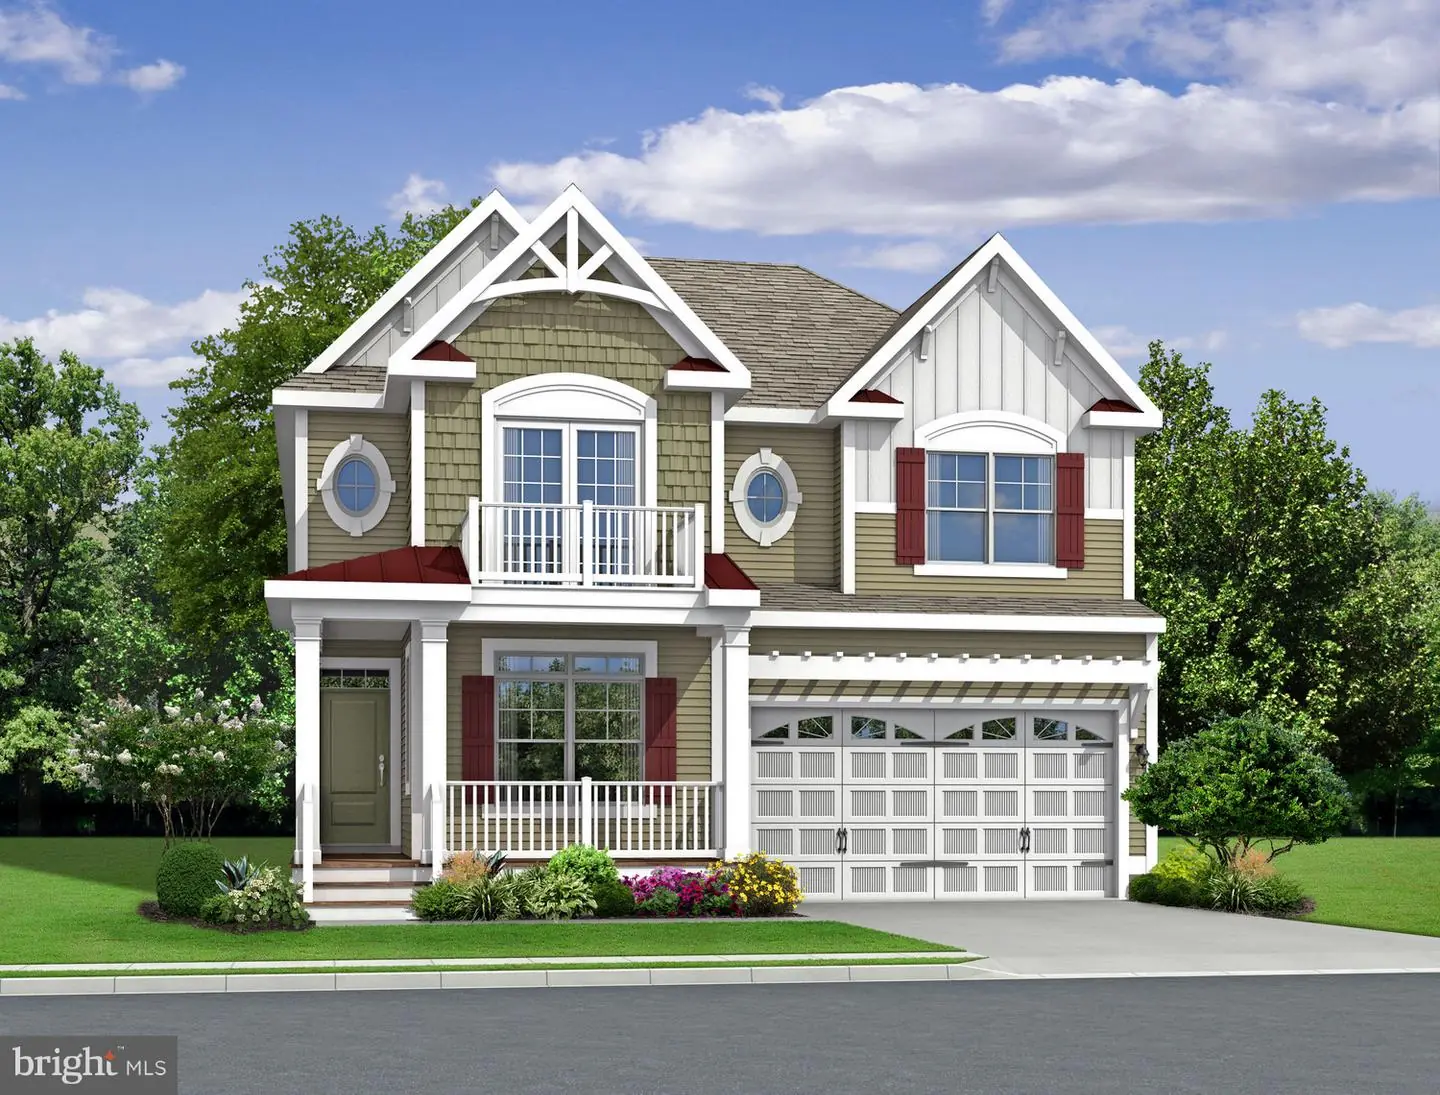 DESU2031540-801975987102-2022-10-27-08-32-50 Lilac Model To-be-built Tbd | Millsboro, DE Real Estate For Sale | MLS# Desu2031540  - David T. King Realtor